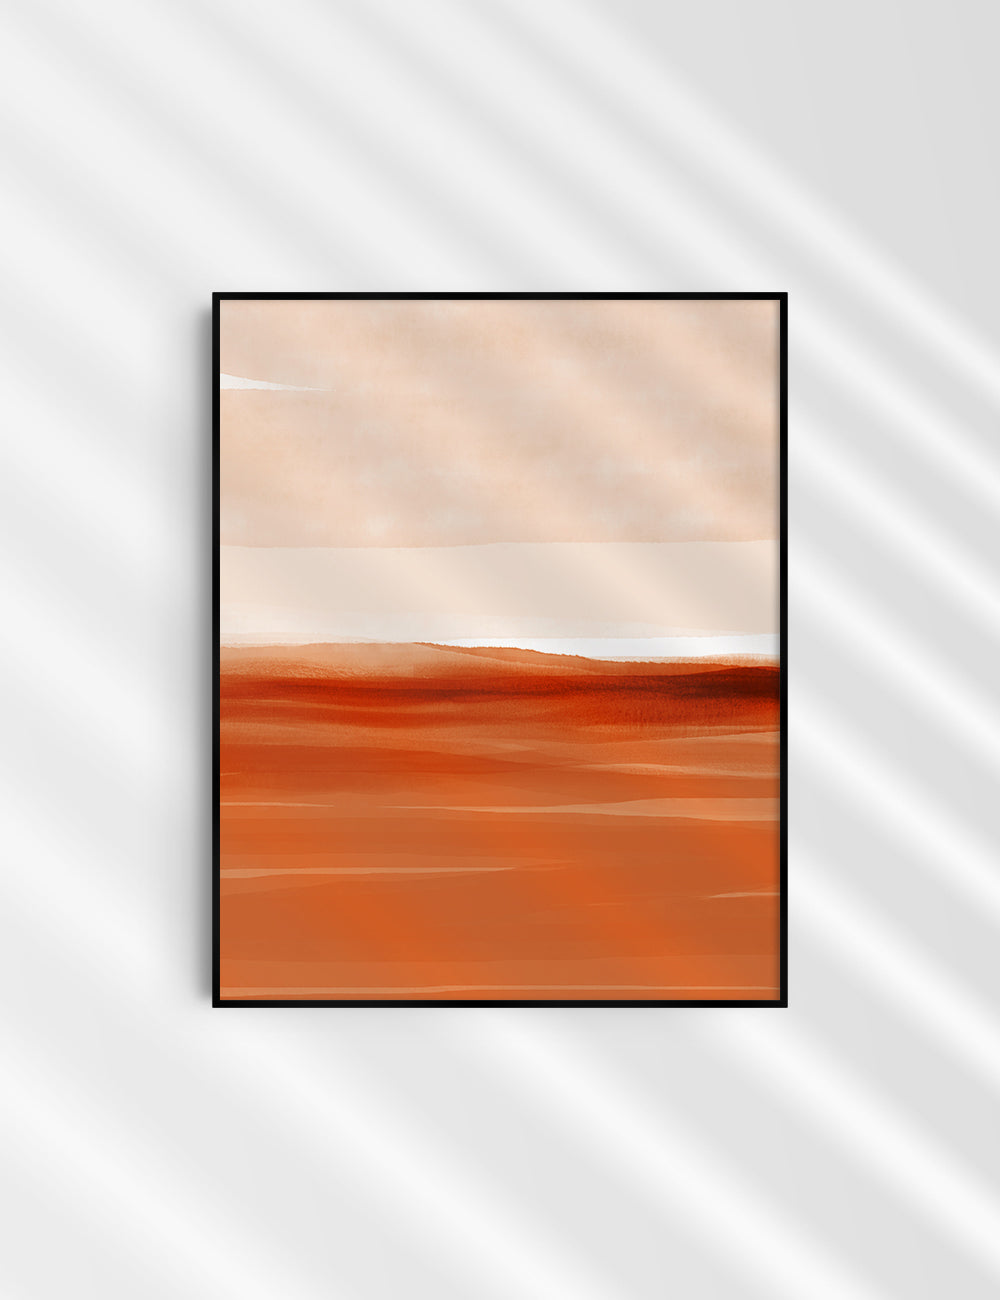 ABSTRACT WATERCOLOR LANDSCAPE. Burnt Orange. Desert. Aesthetic. Minimalist. Printable Wall Art. - PAPER MOON Art & Design